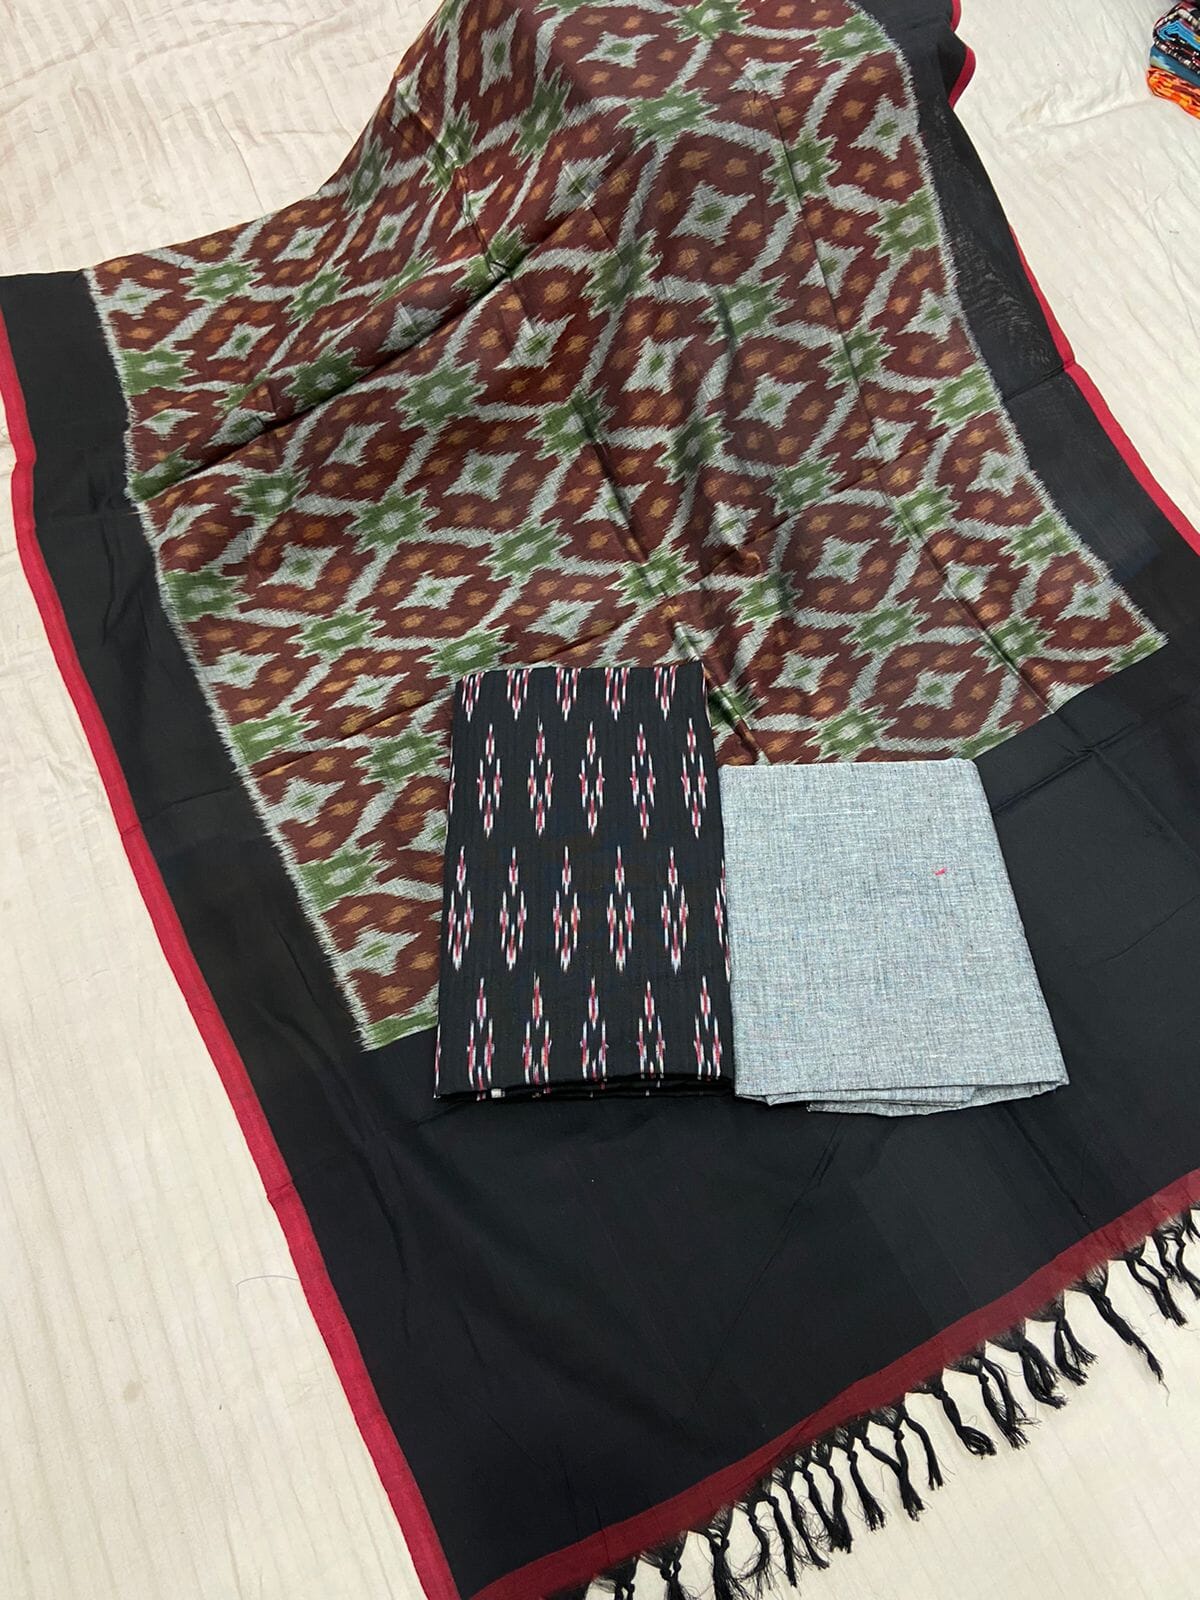 Double Ikat Cotton Dress Material * – RKG SHOPPING